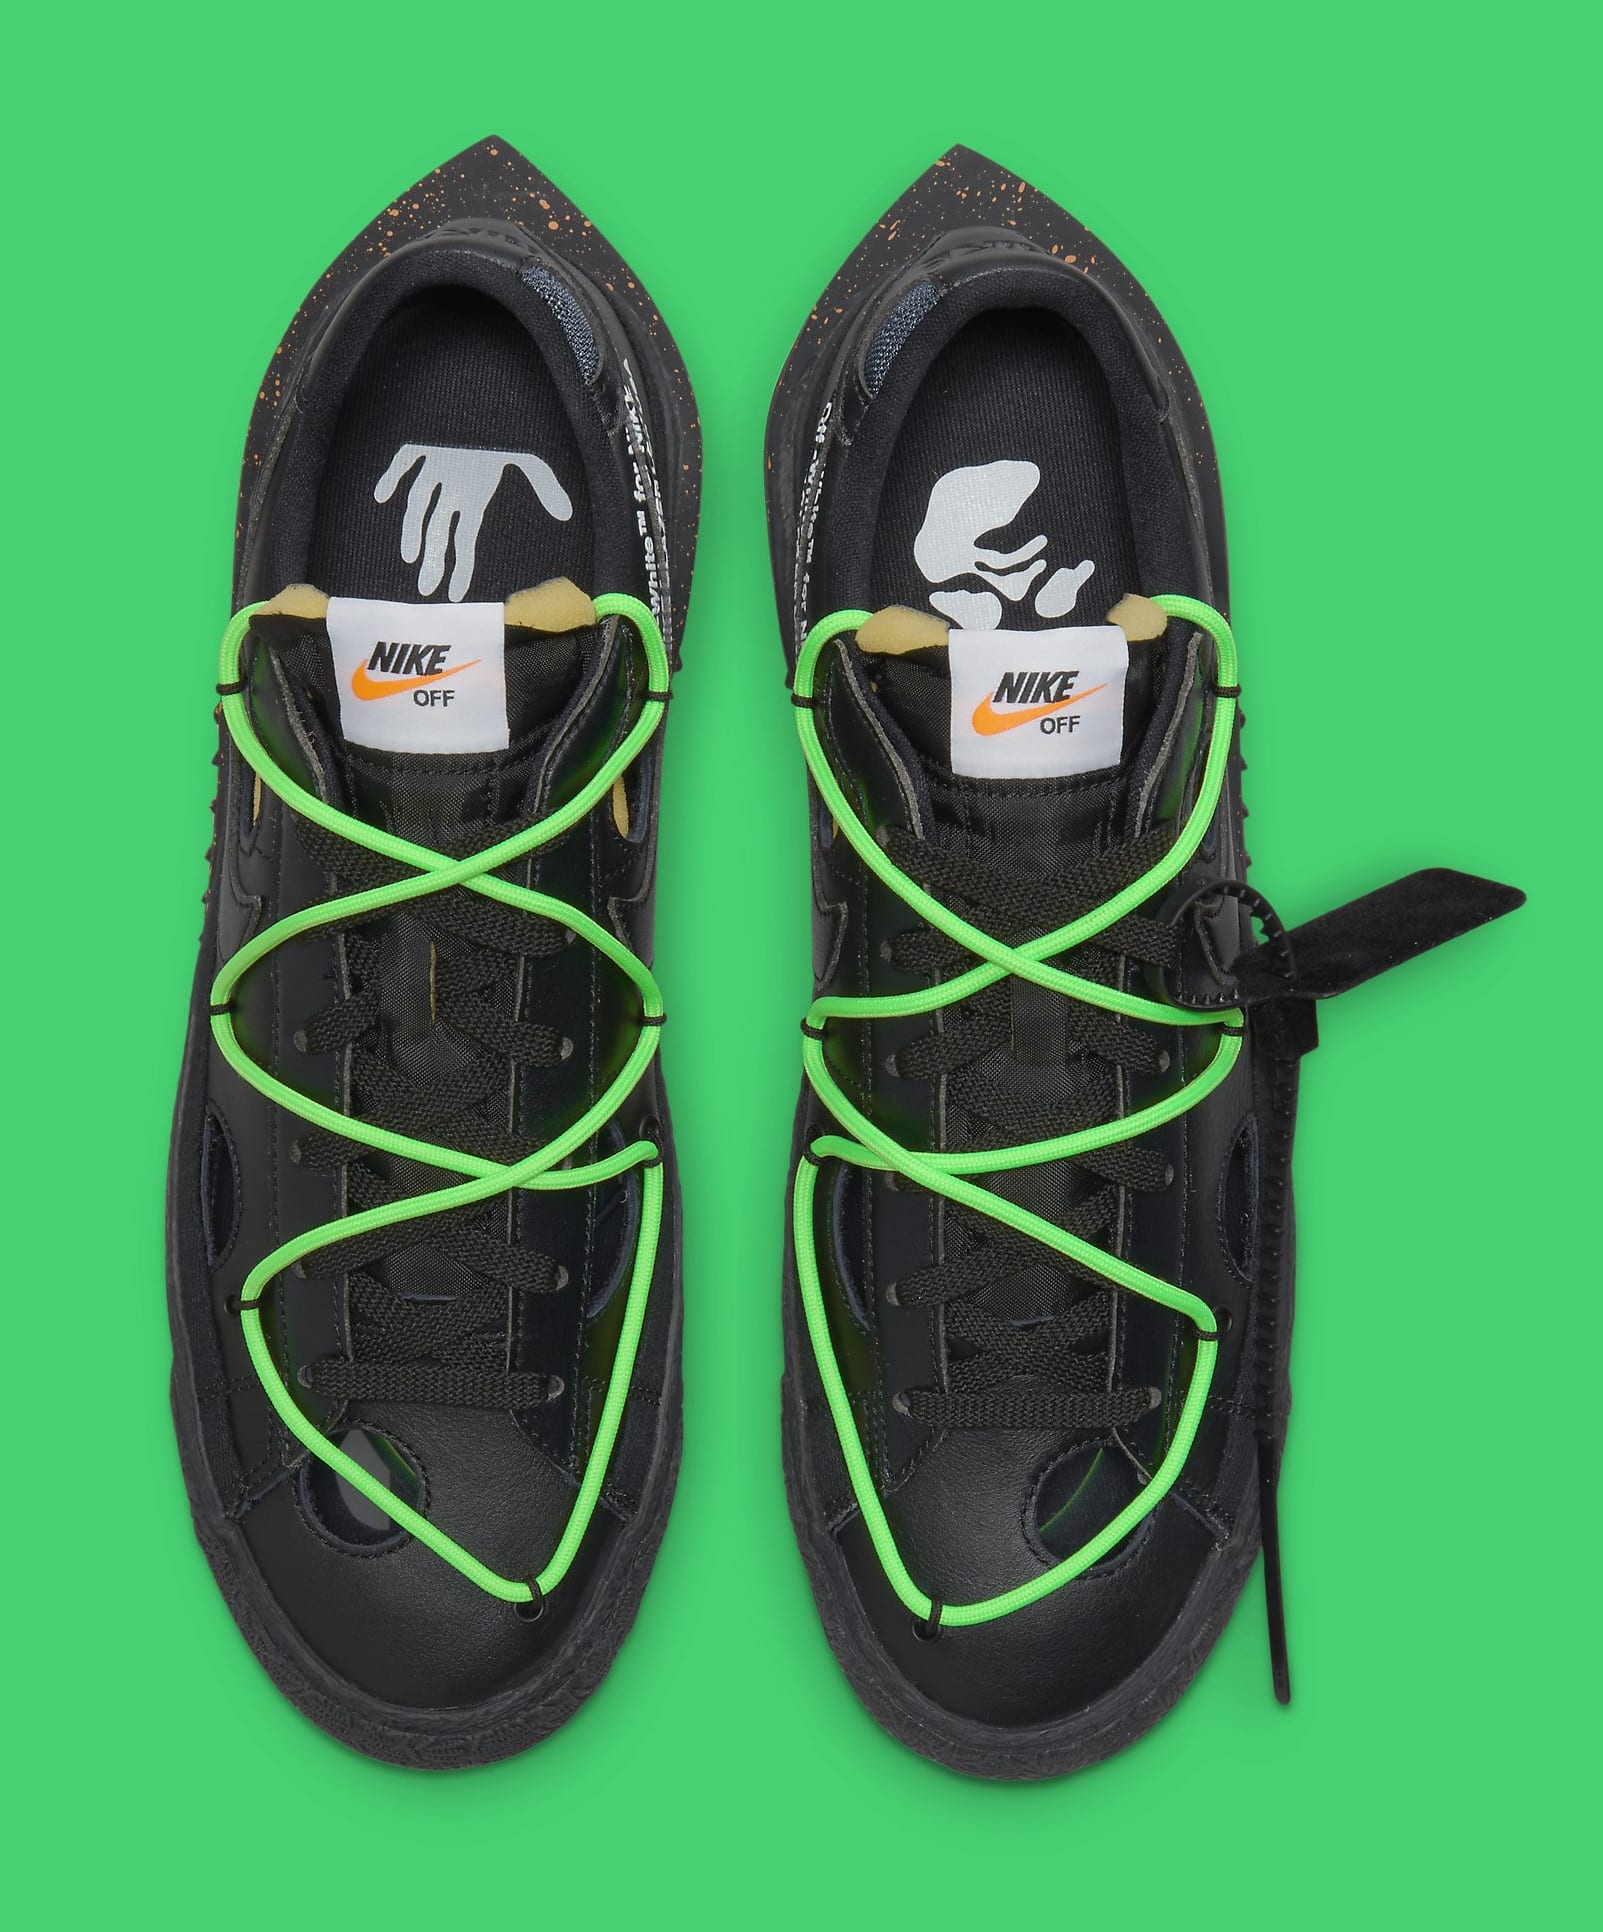 Off-White x Nike Blazer Low 'Black/Electro Green' DH7863 001 Top